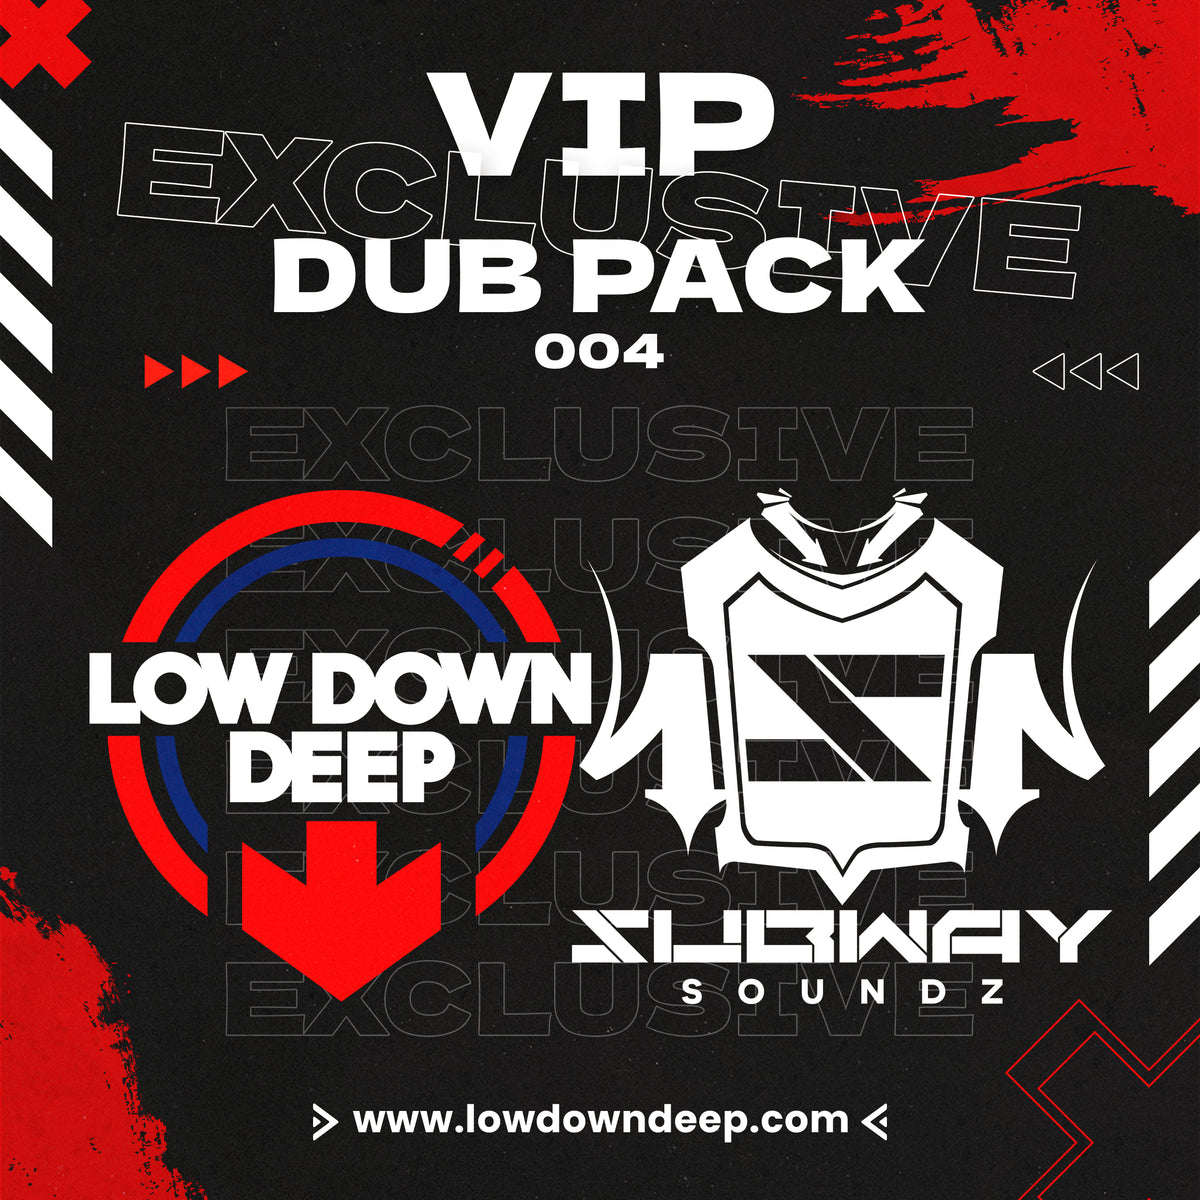 LOW DOWN DEEP & SUBWAY SOUNDZ EXCLUSIVE VIP DUB PACK 004